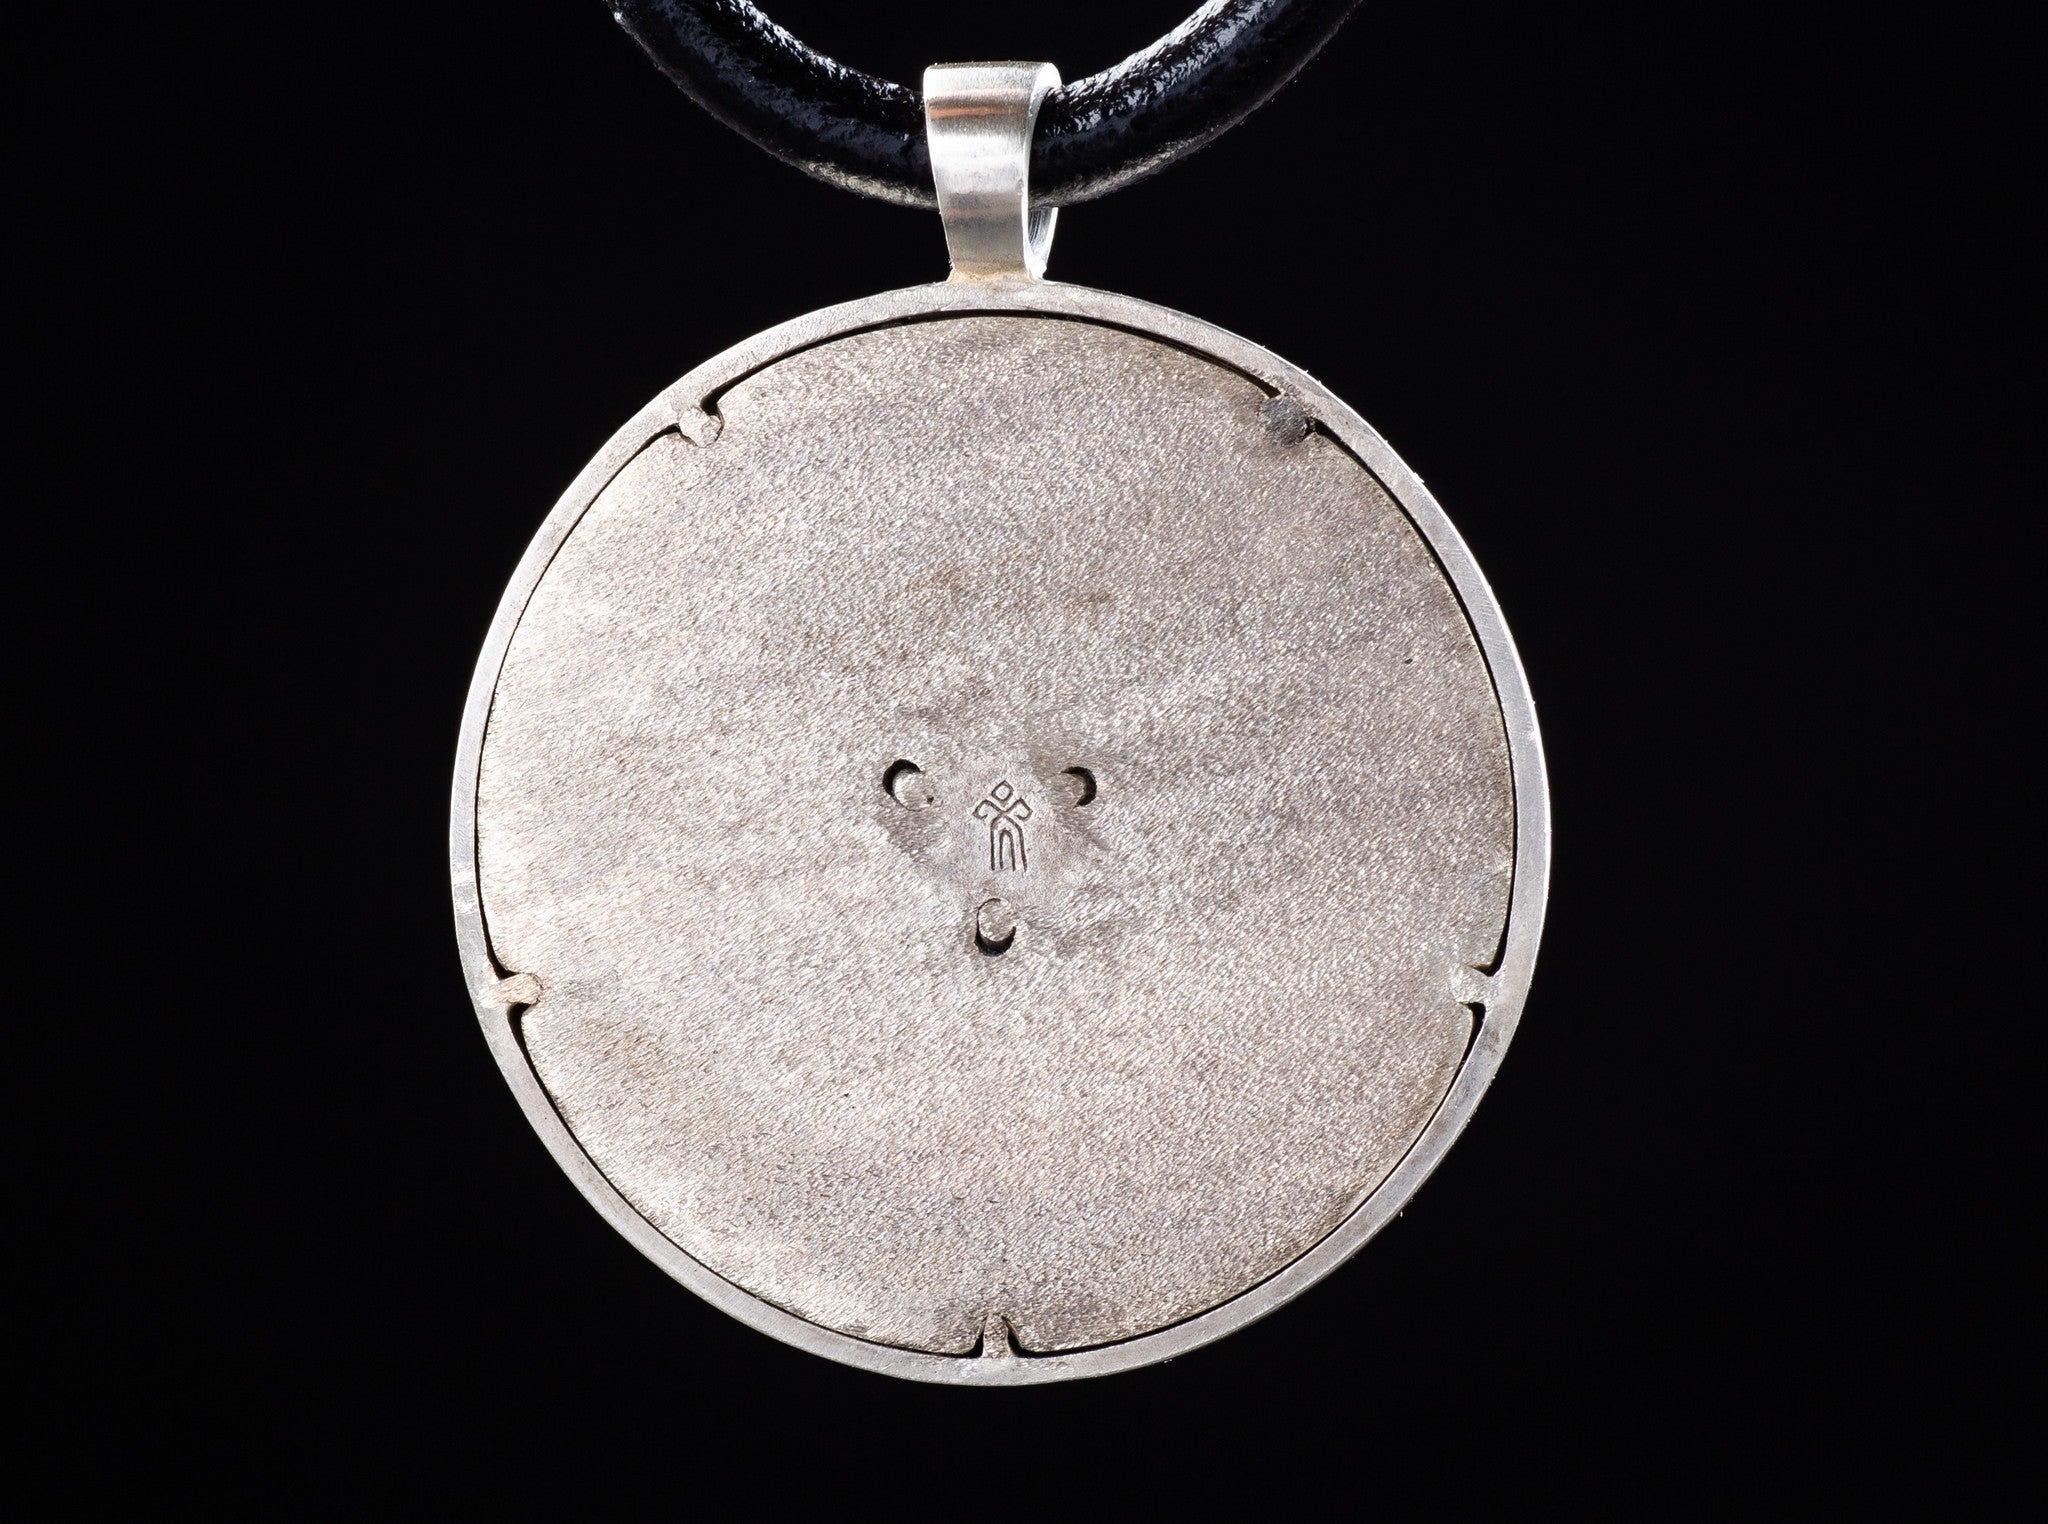 pendant backside with shop logo 'Yachur'